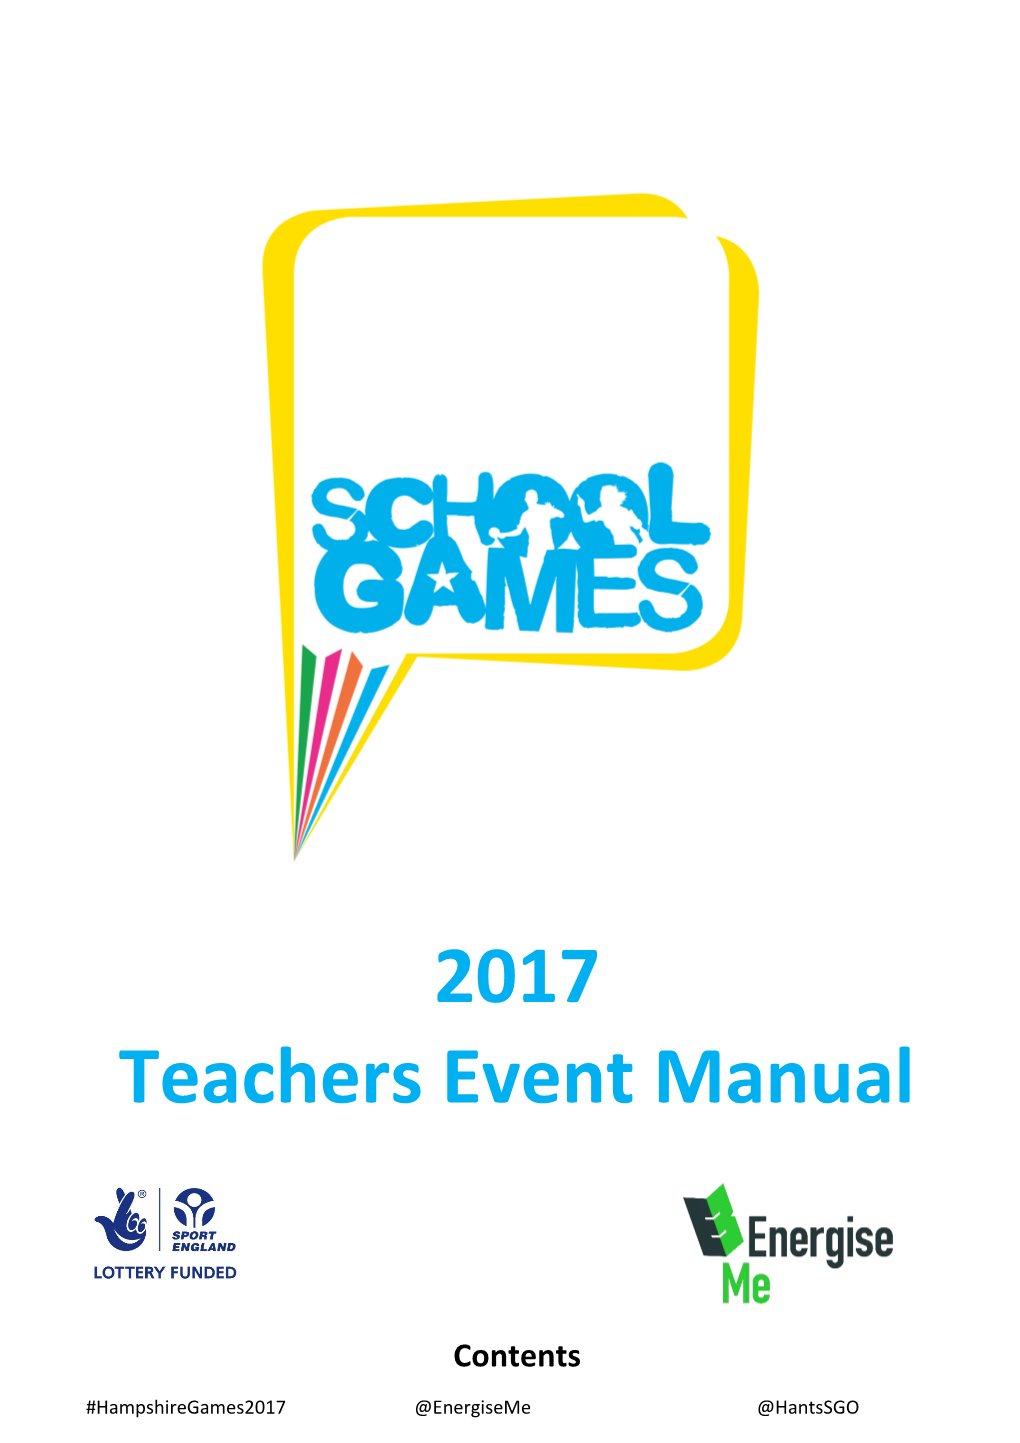 Teachers Event Manual